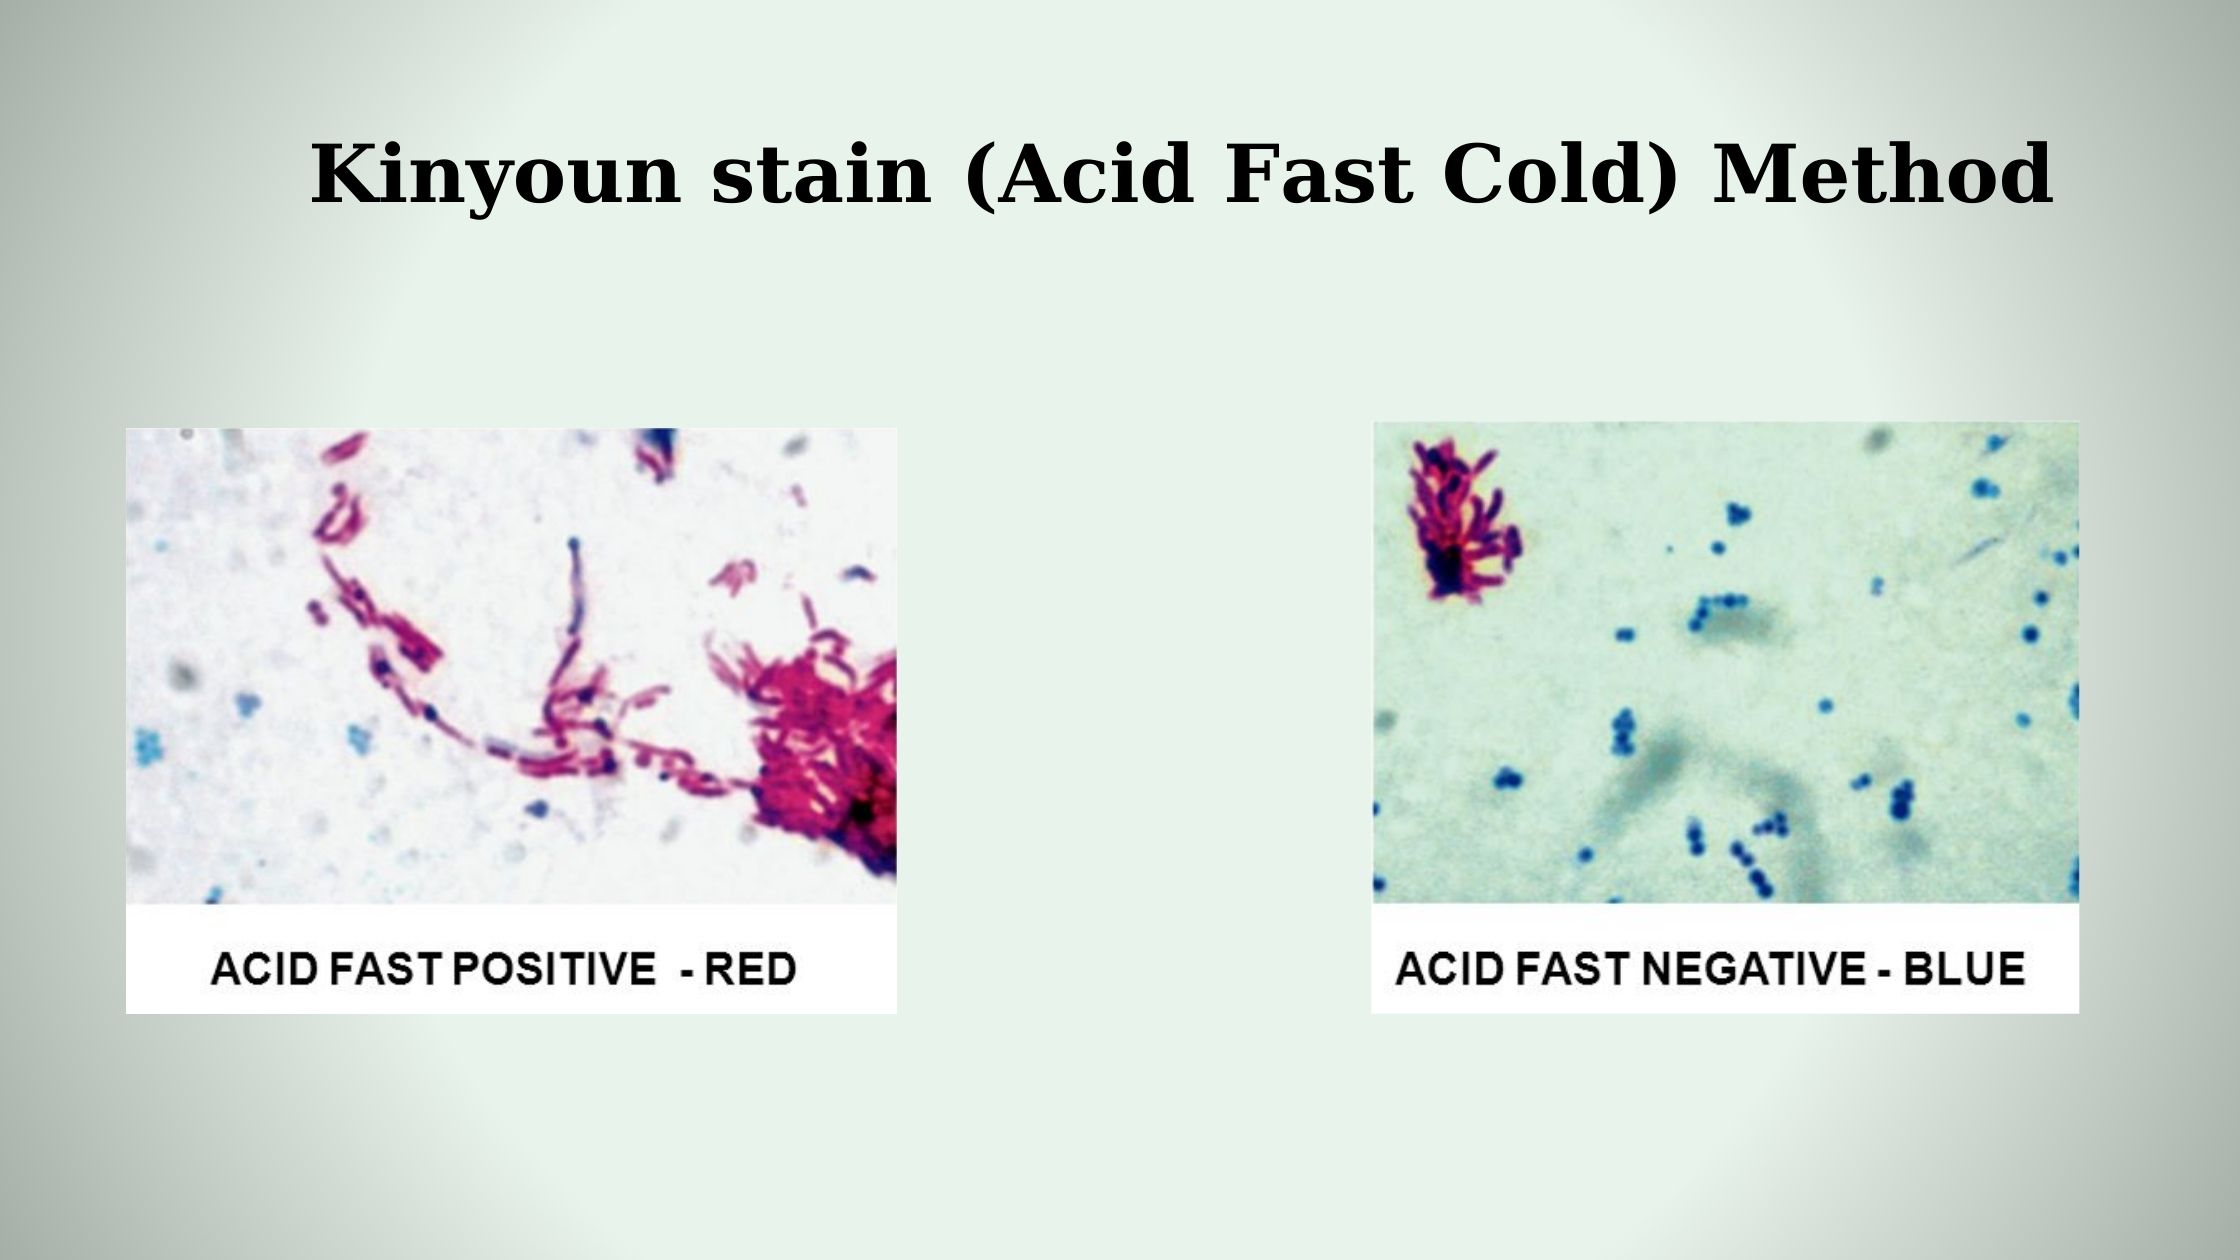 Kinyoun stain (Acid Fast Cold) Method: Principle, Procedure, Result